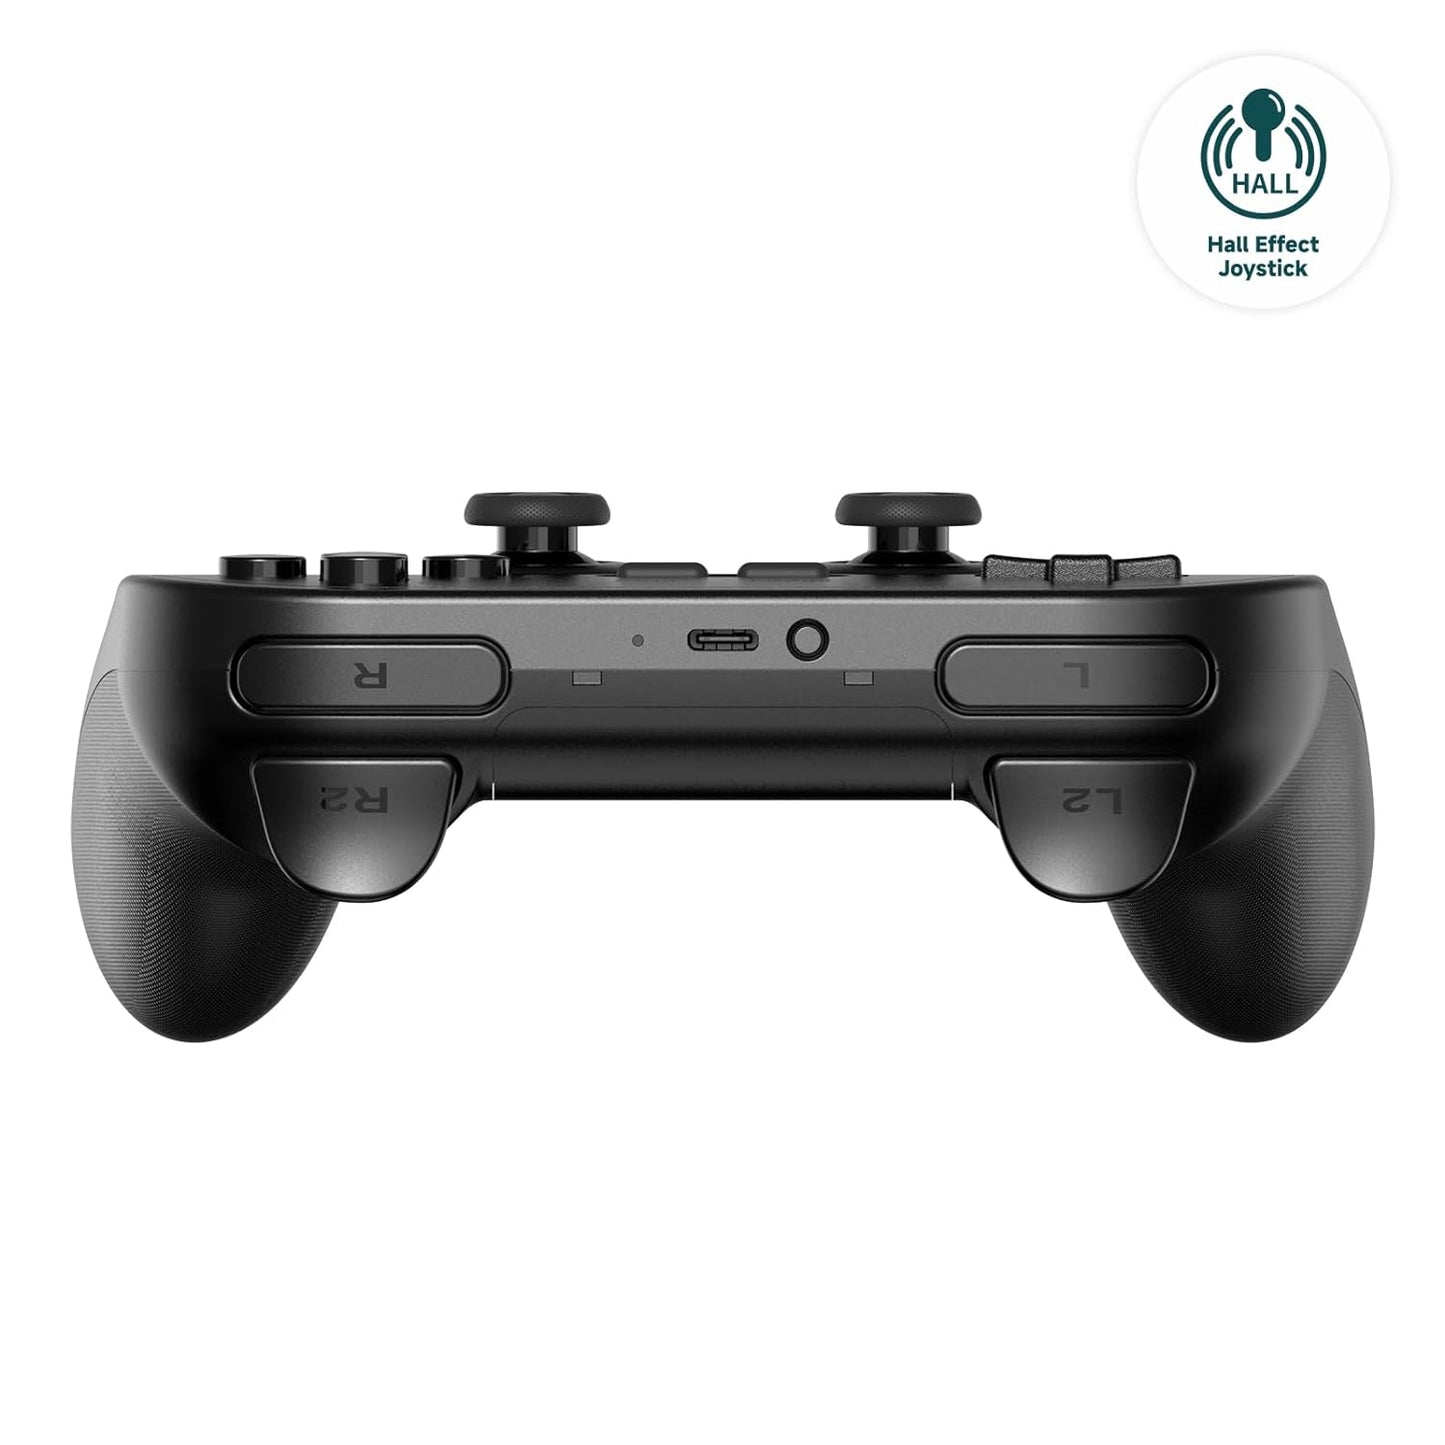 8Bitdo Pro 2 Wireless Bluetooth Gaming Controller & Hall Effect Joystick Black